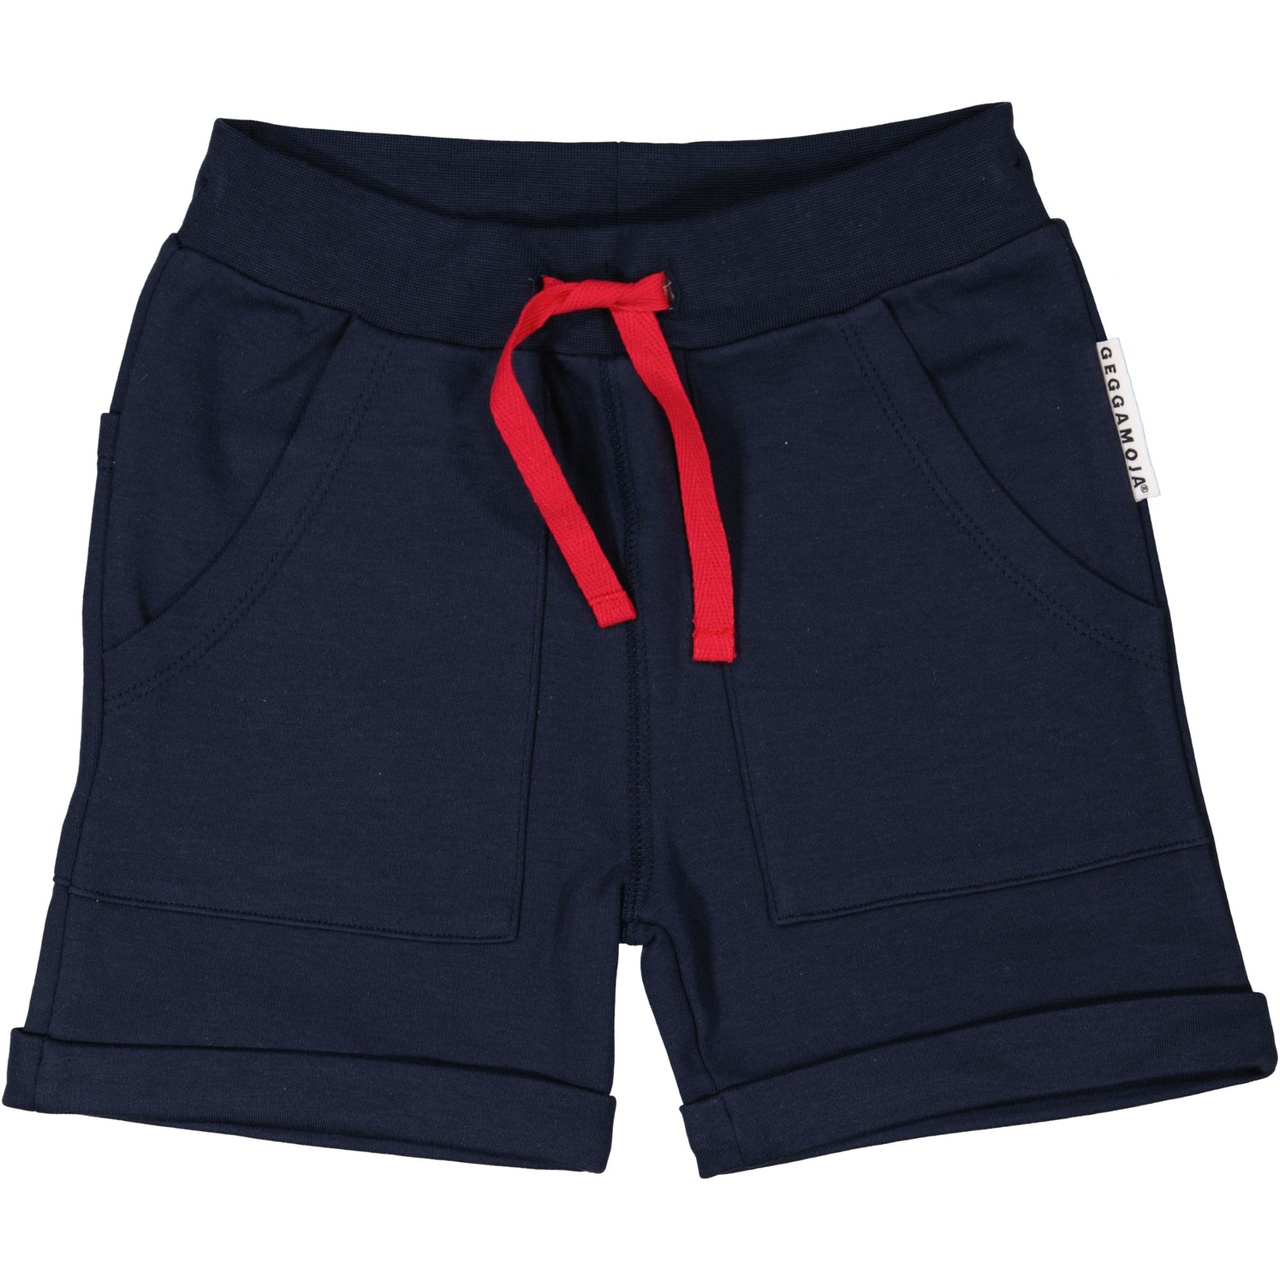 Shorts Navy/red